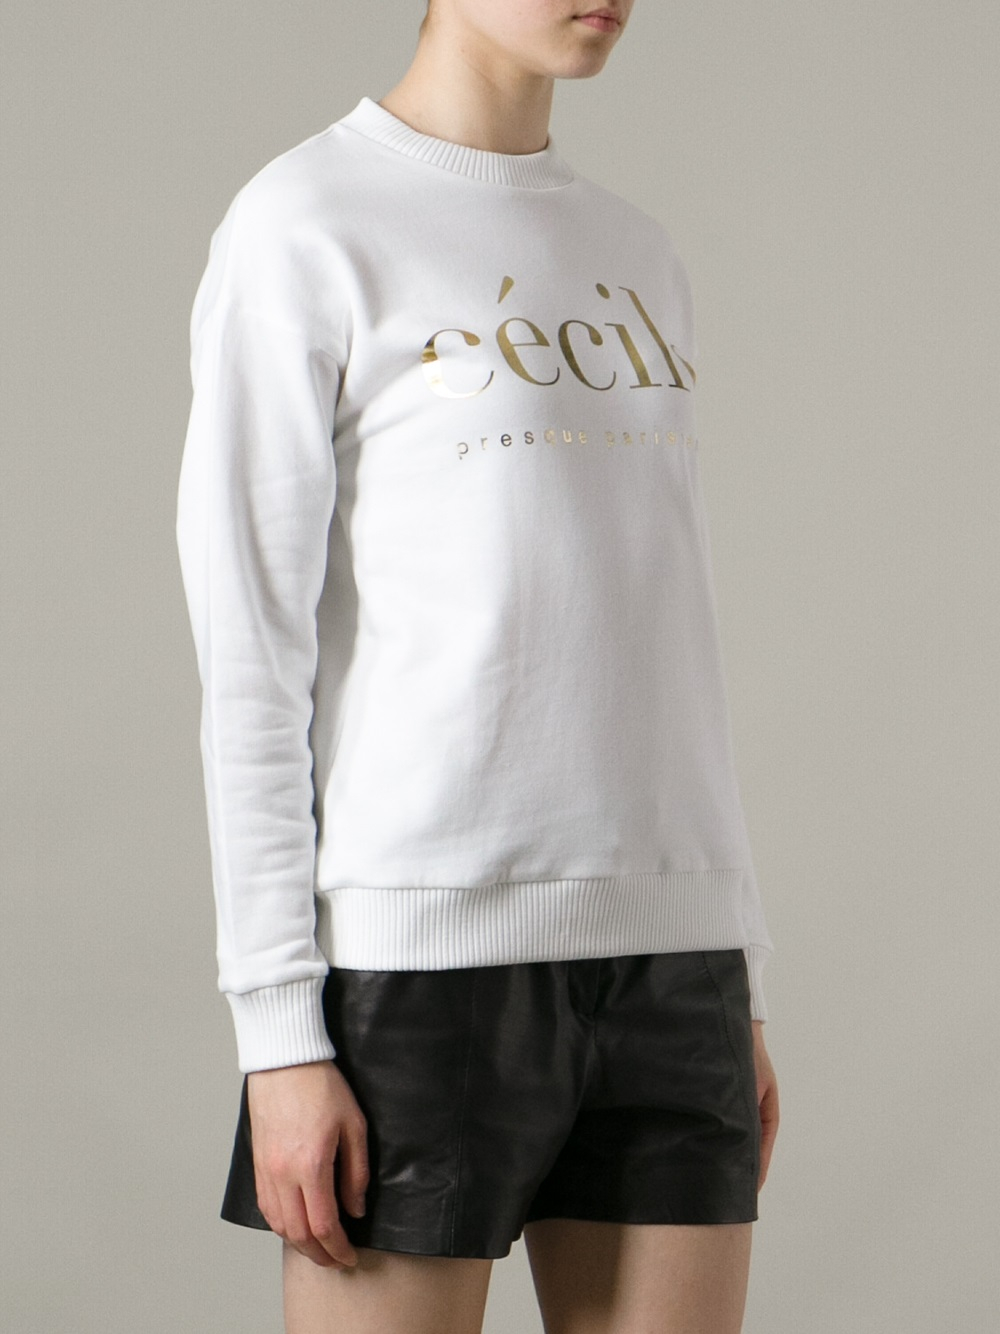 Lyst - Être cécile Brand Print Sweatshirt in White